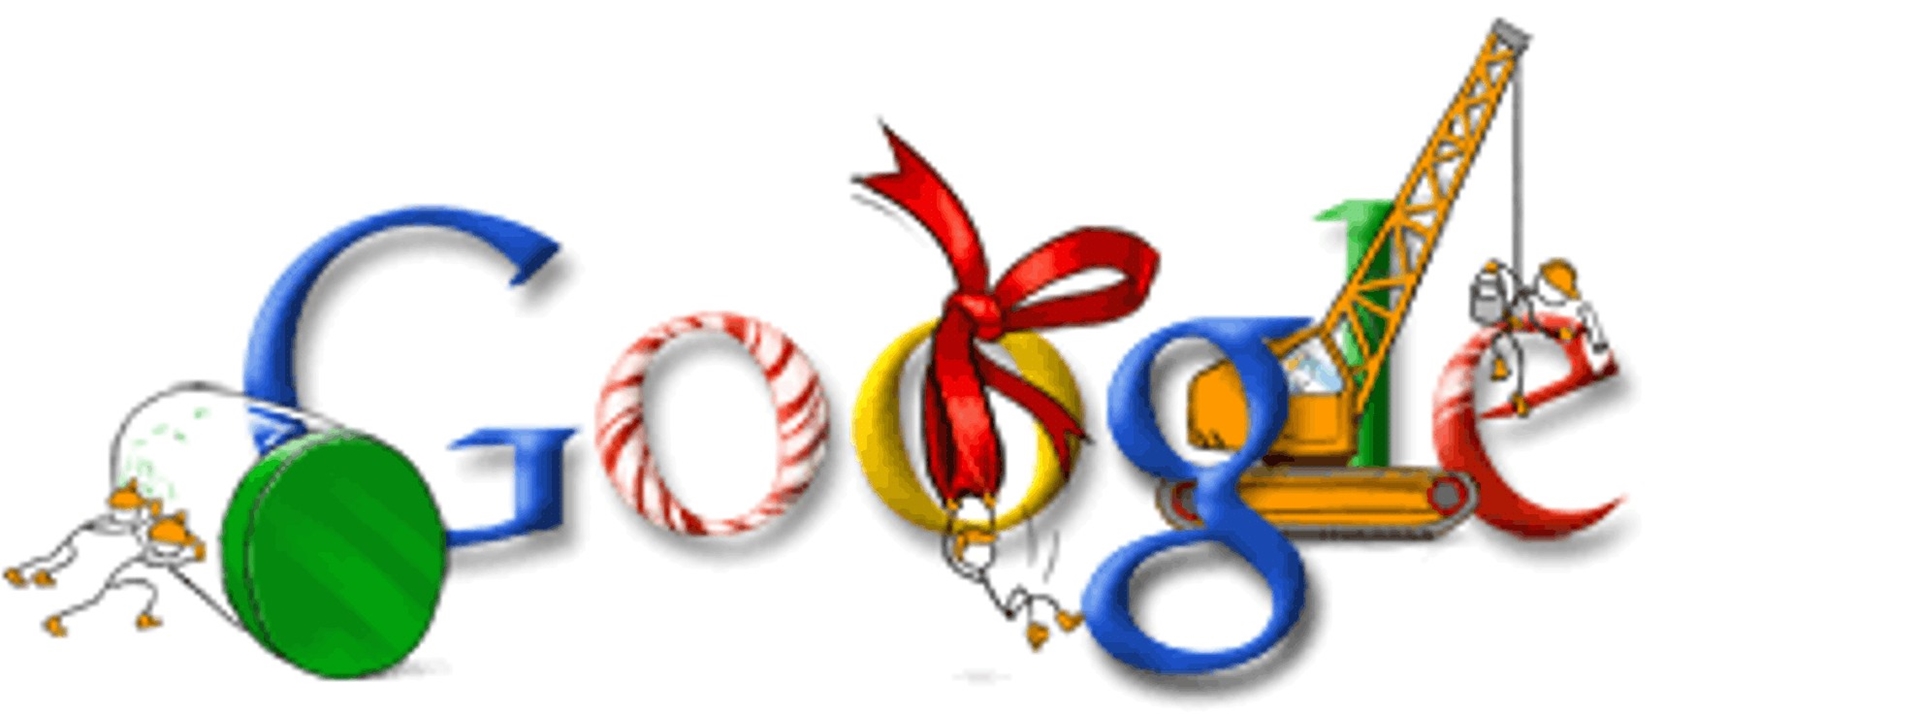 Happy Holidays by Google